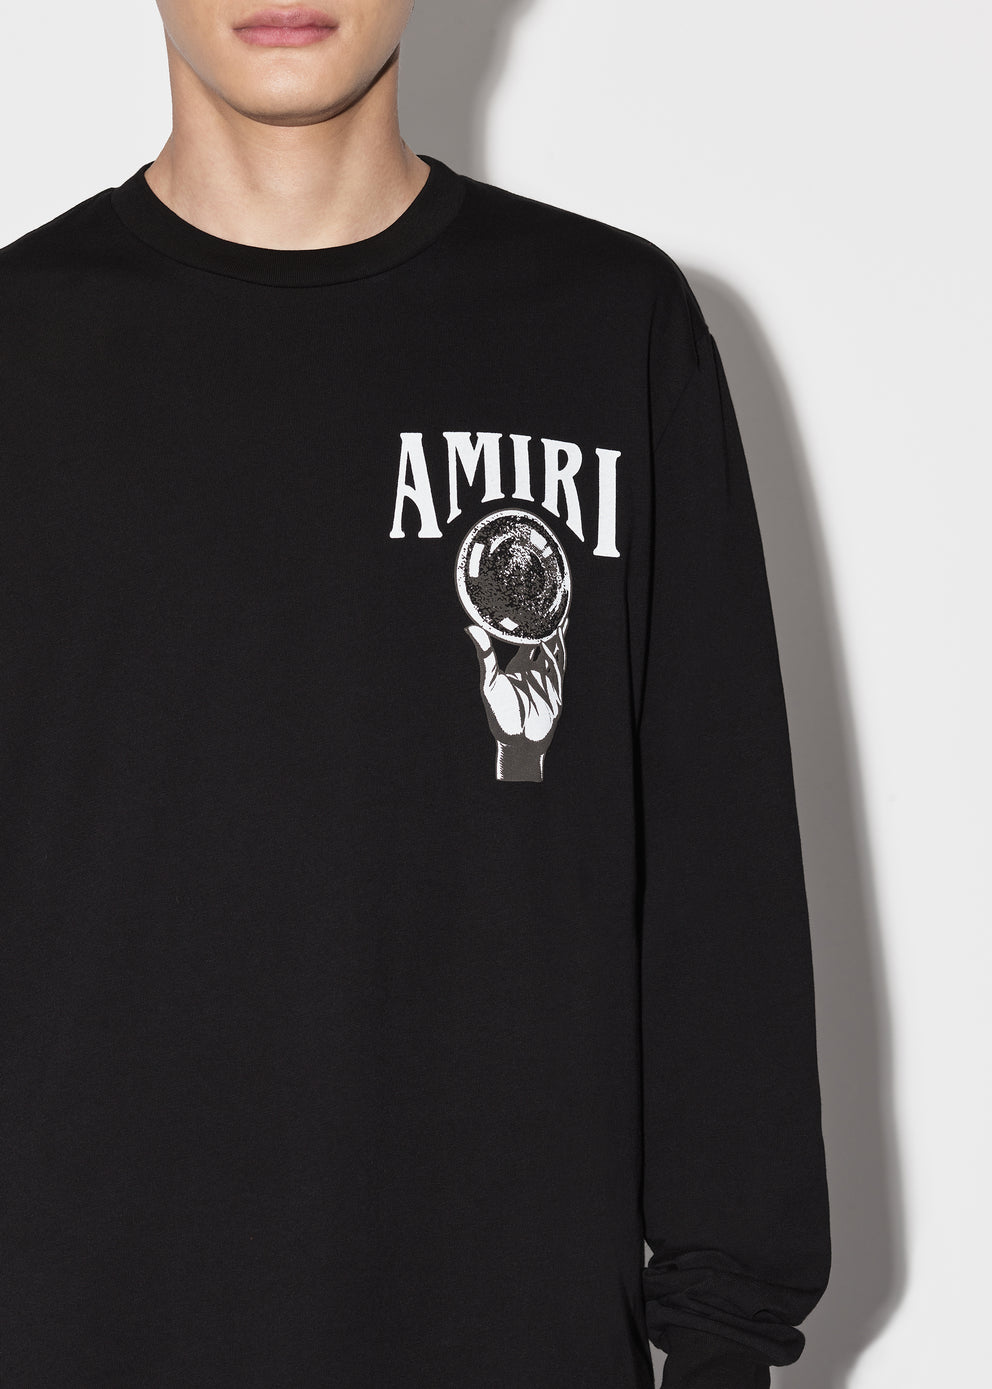 Camisas Amiri Crystal Ball Long Sleeve Hombre Negras | 4608-OCERH